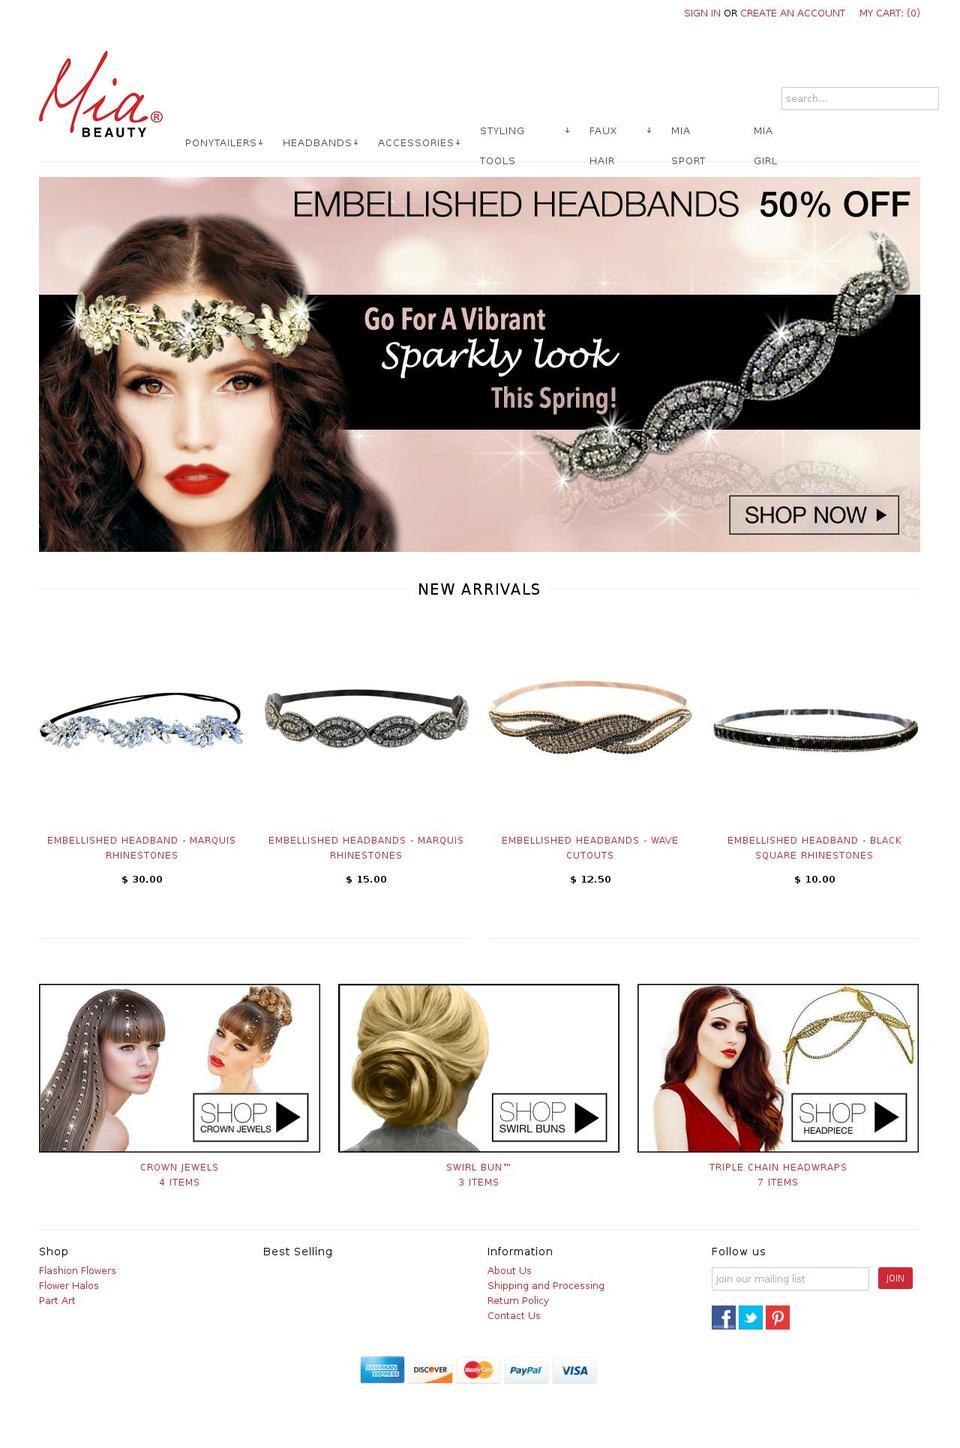 miabeauty.com shopify website screenshot